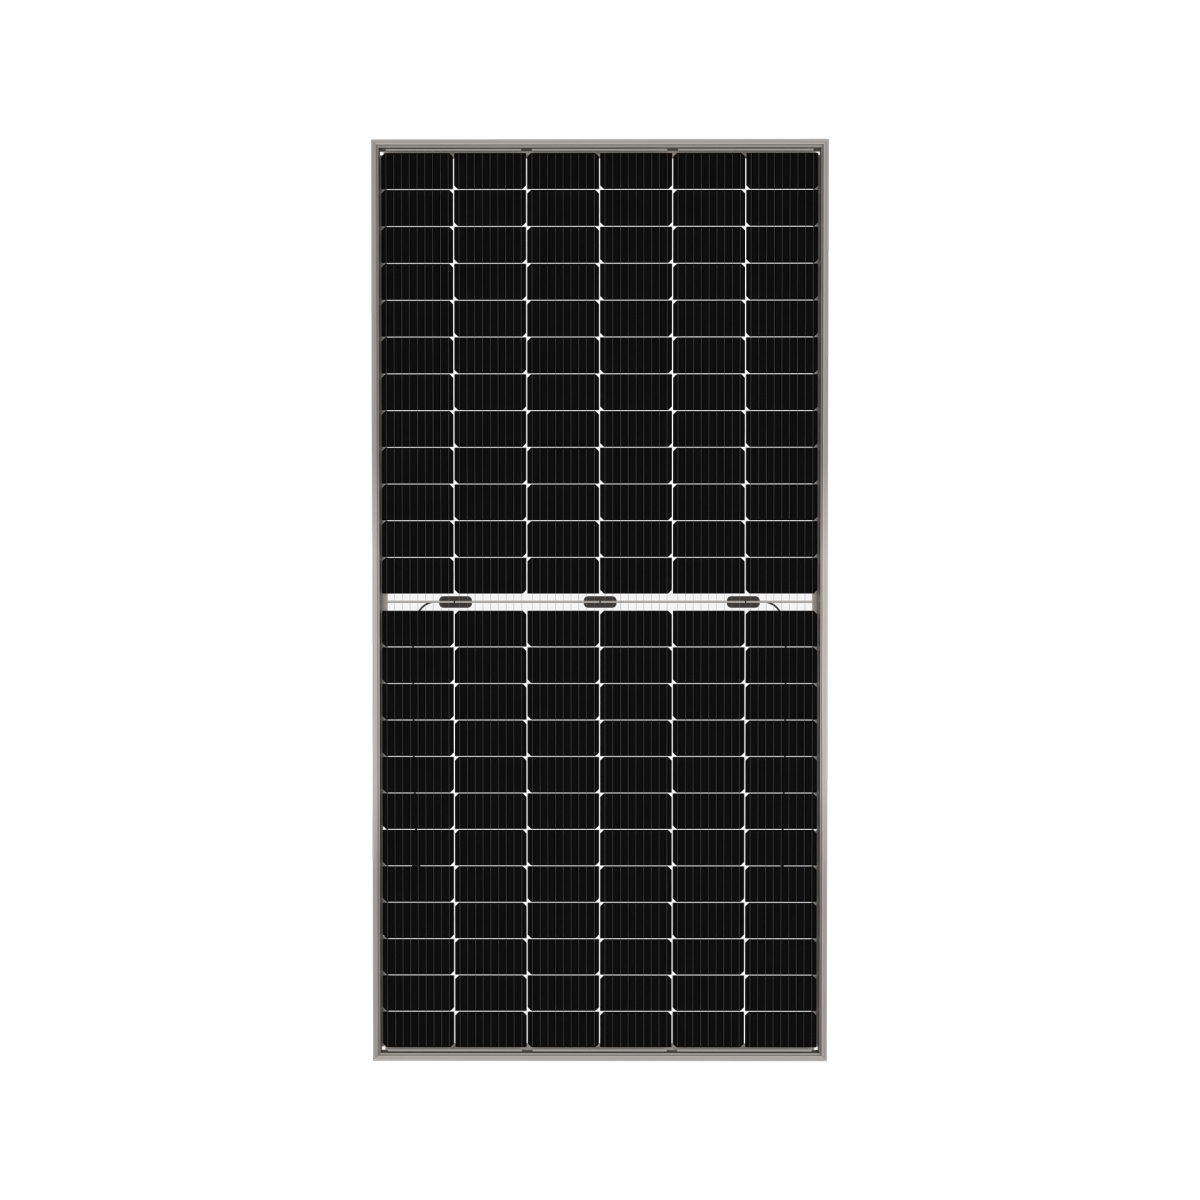 TommaTech 440 Watt 144 Percmono Bifacial Half-Cut Multi Busbar Solar Panel